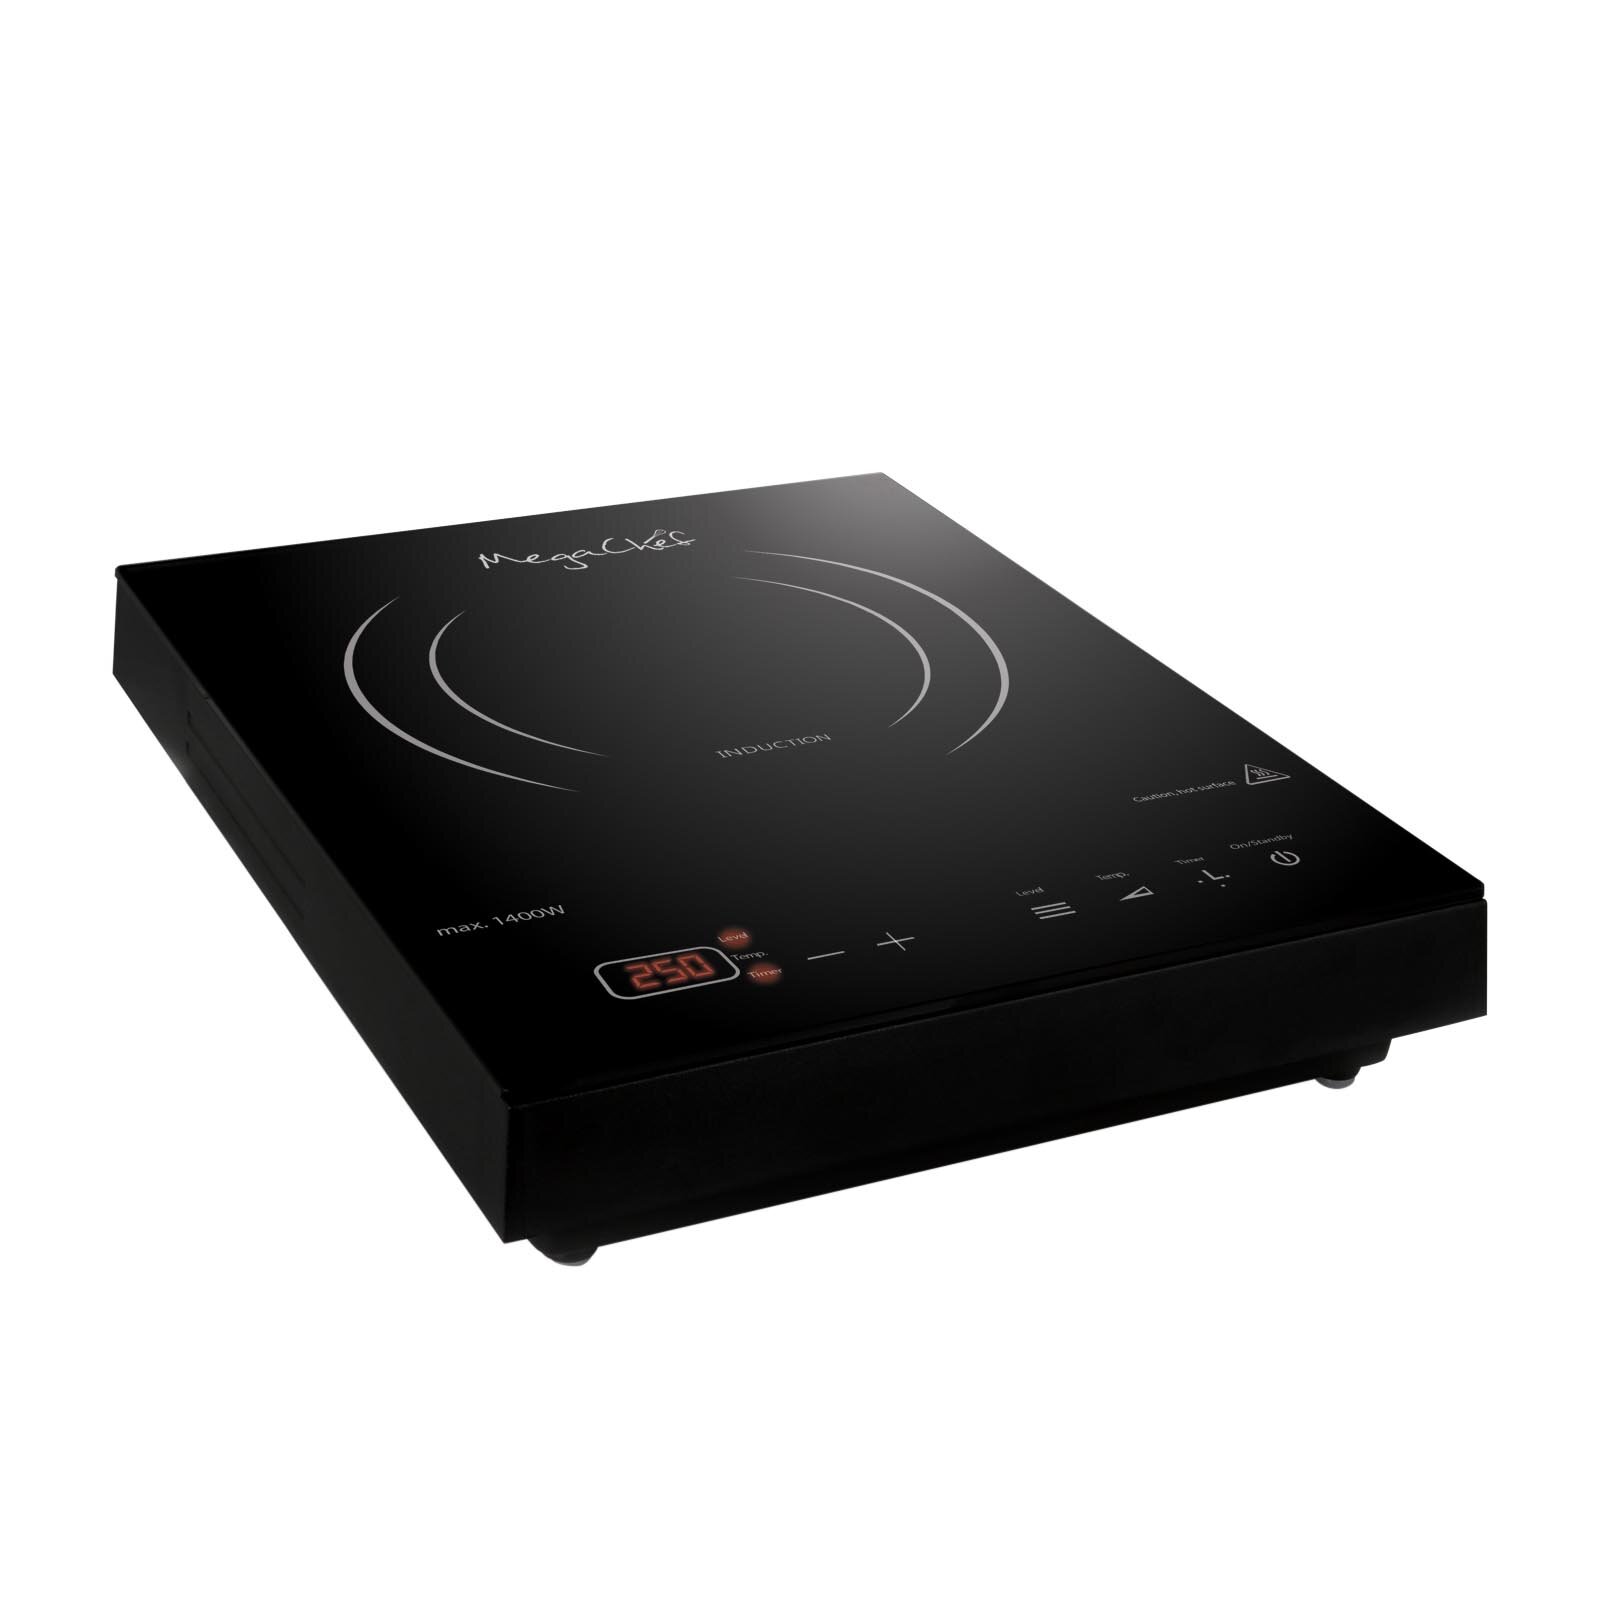 Mega Chef 1800 Watt Electric Double Hot Plate & Reviews